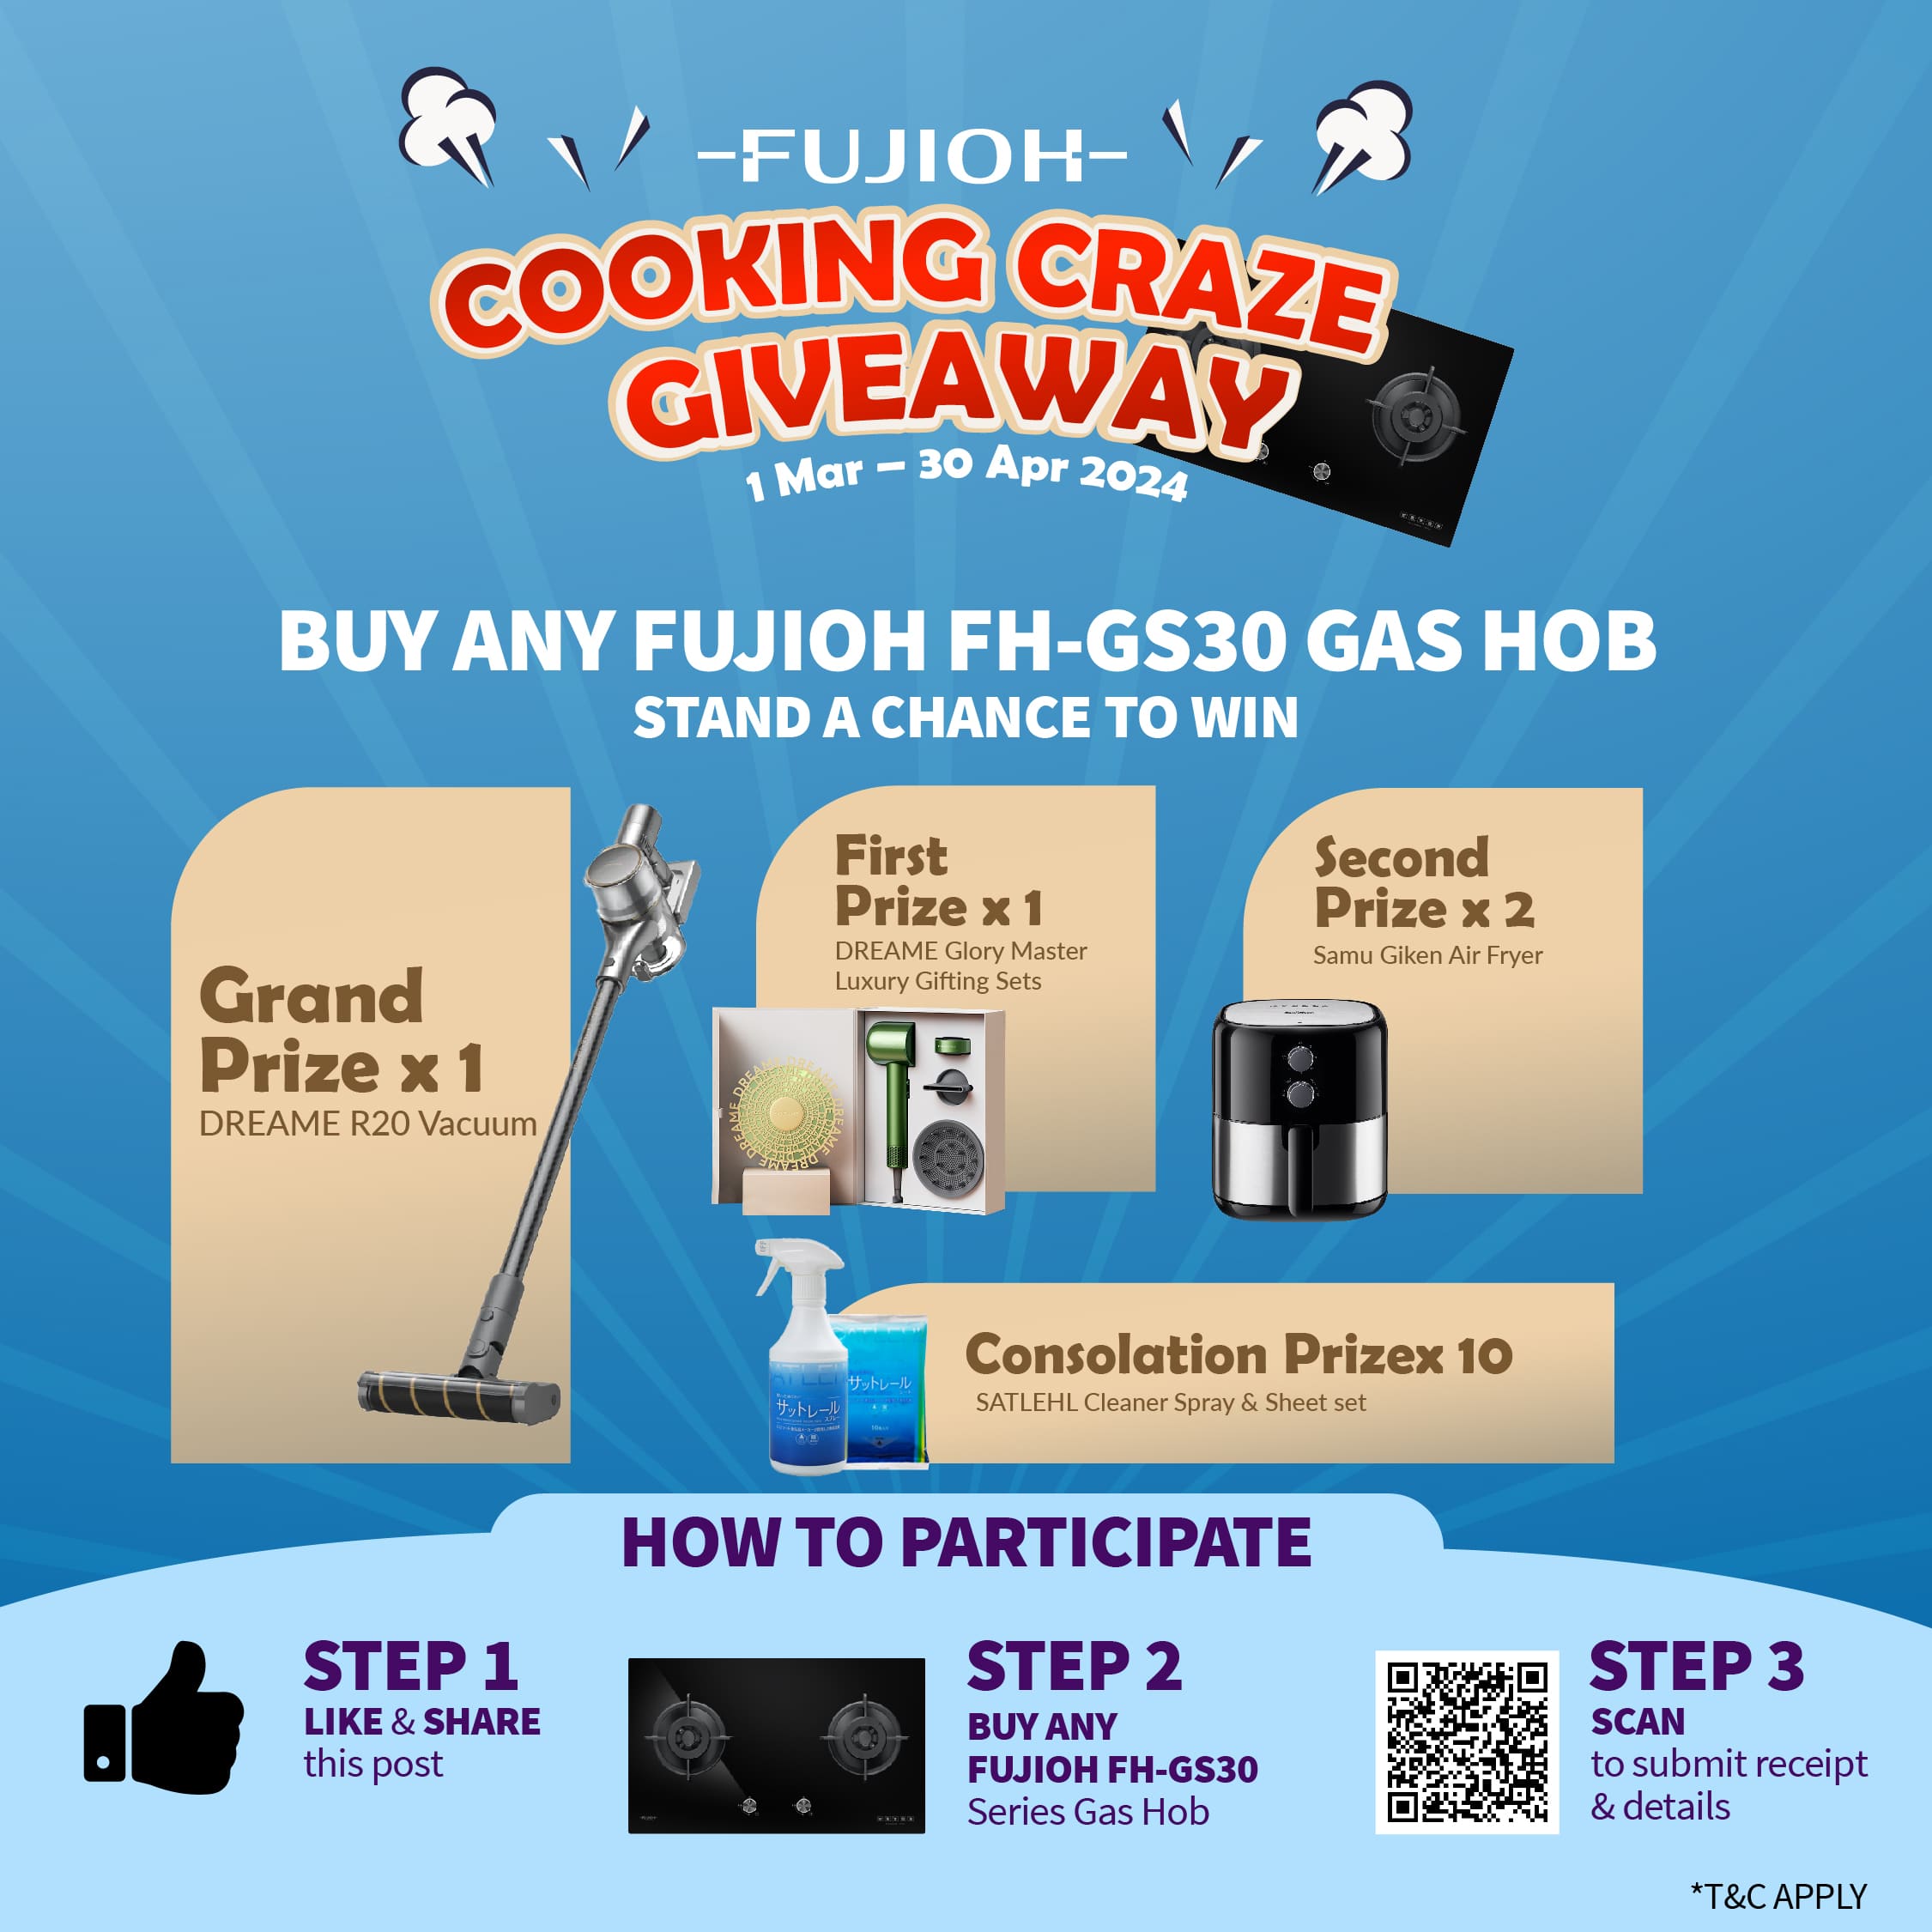 FUJIOH Cooking Craze Giveaway Contest